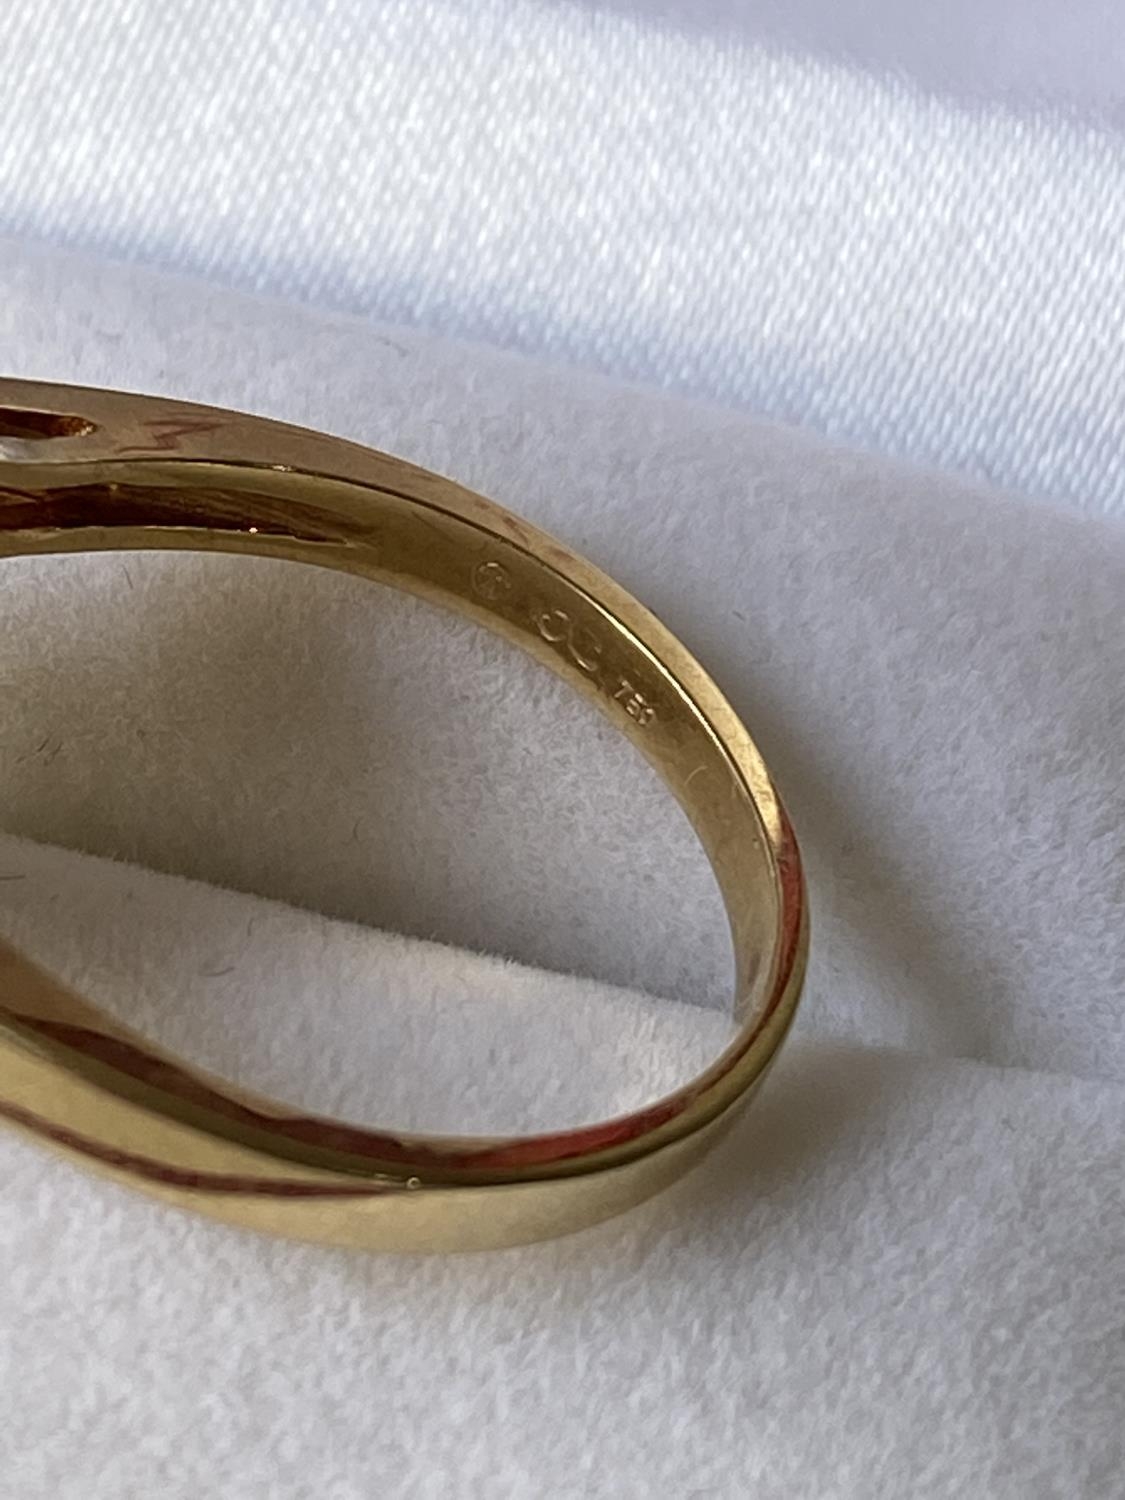 An 18ct gold ladies diamond & ruby set ring [size M] [4.13g] - Image 12 of 12